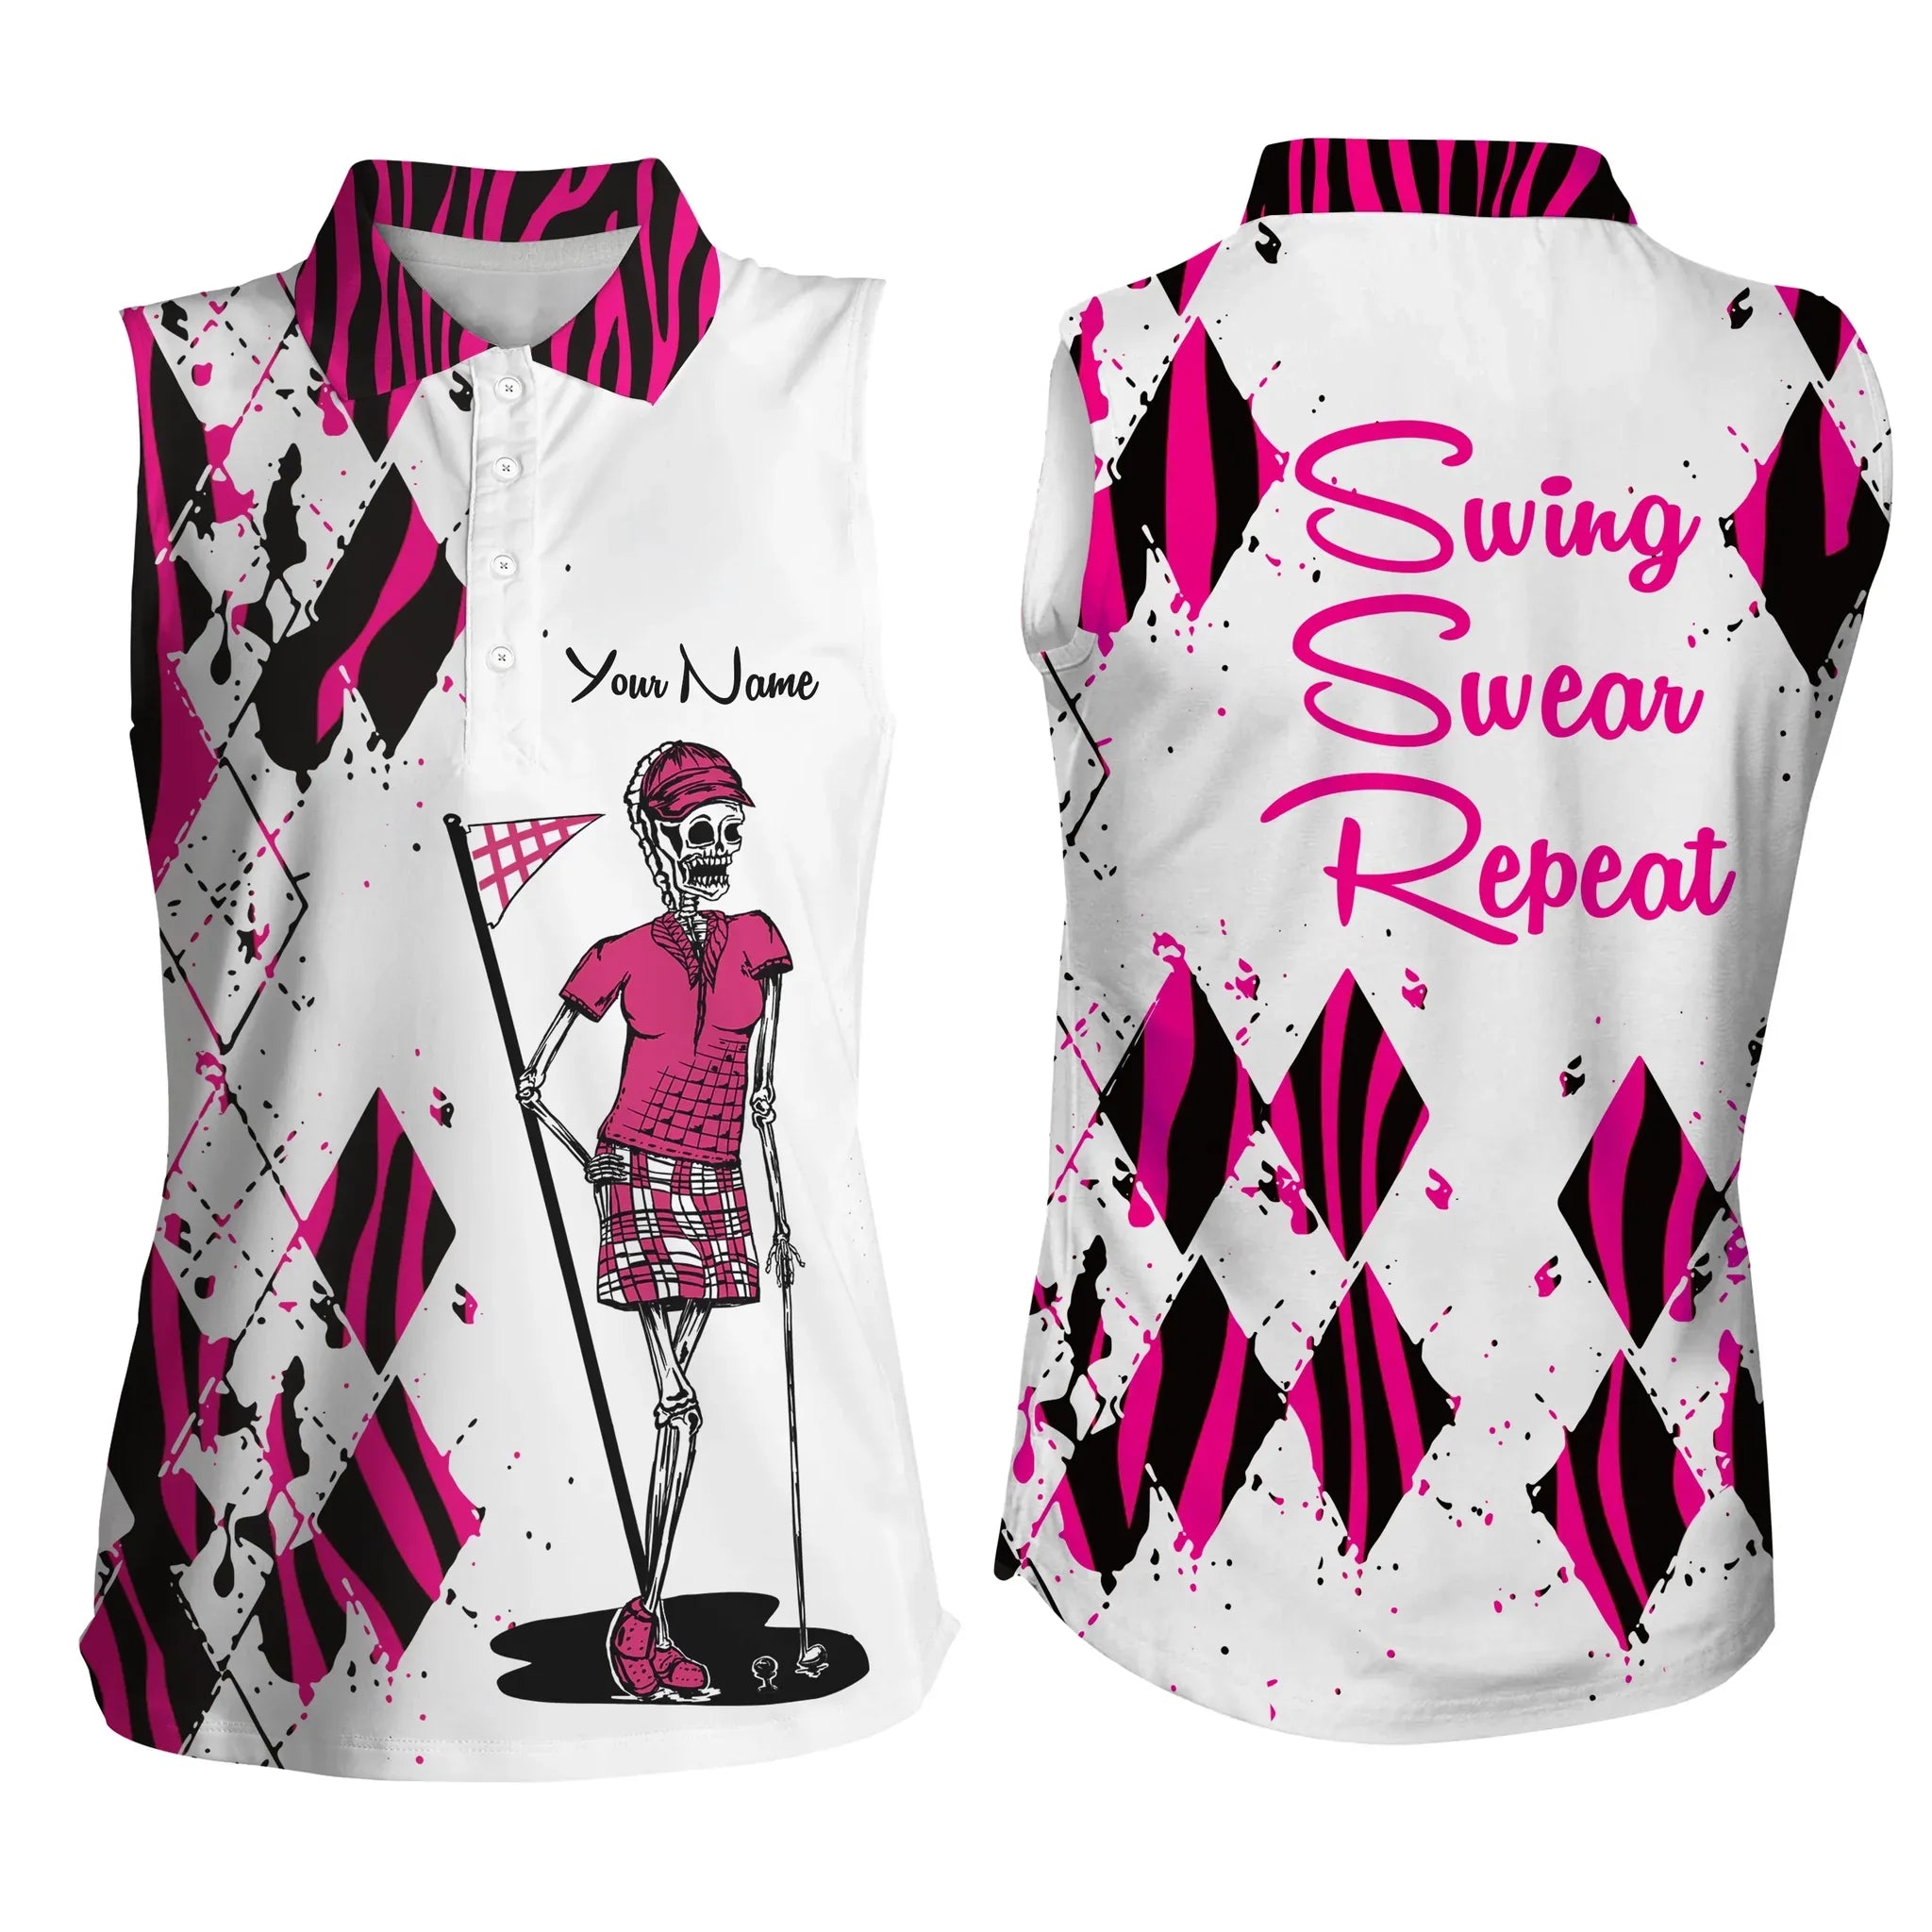 Women sleeveless polo shirts/ custom ladies golf skull pink zebra pattern golf shirt swing swear repeat